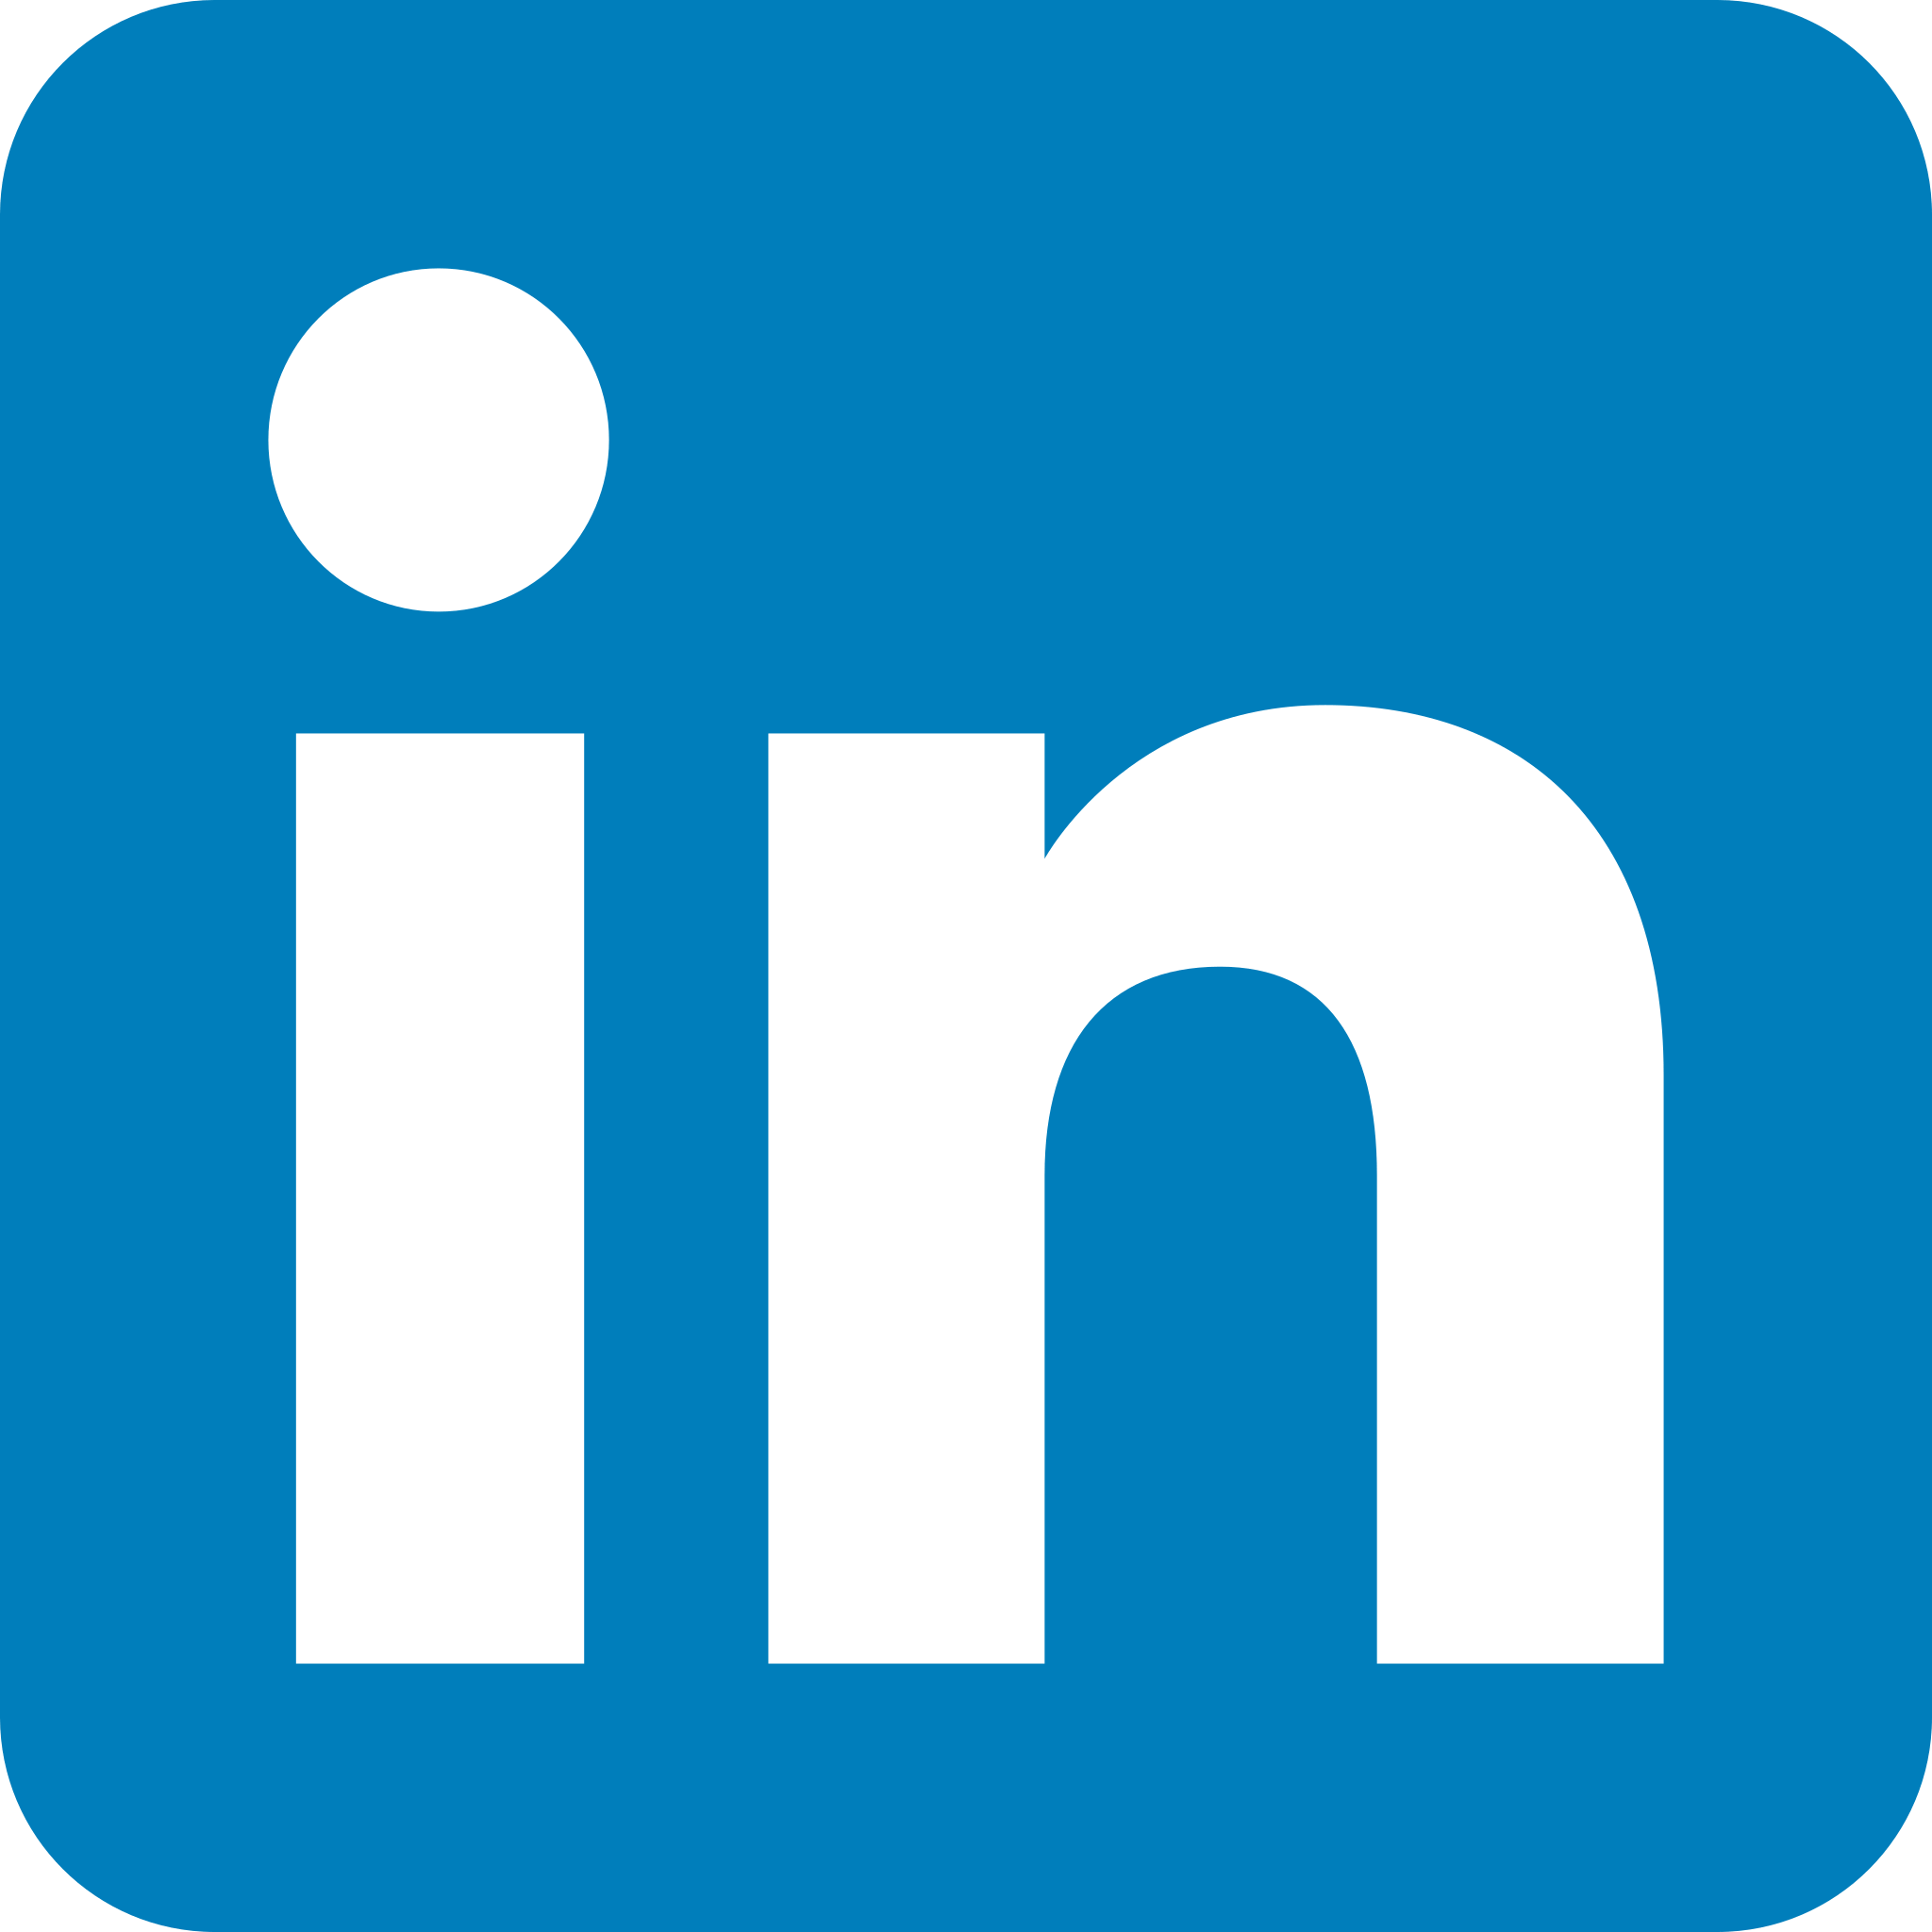 LinkedIn logotips